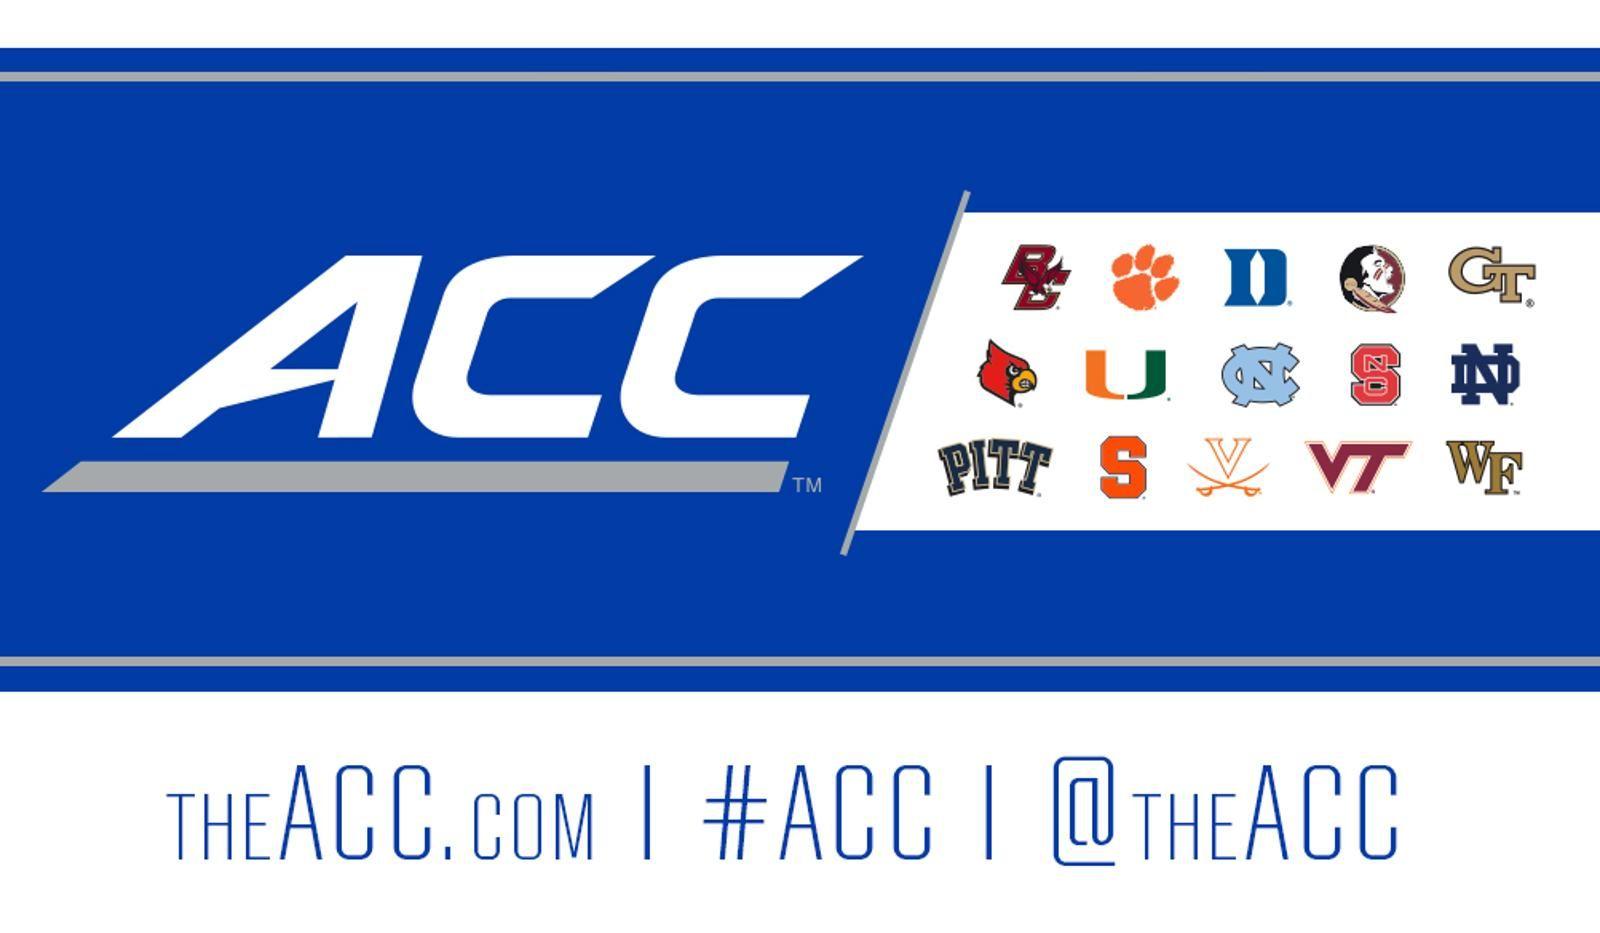 ACC Logo - Ninja Swofford's new ACC logo font looks awfully ... familiar ...